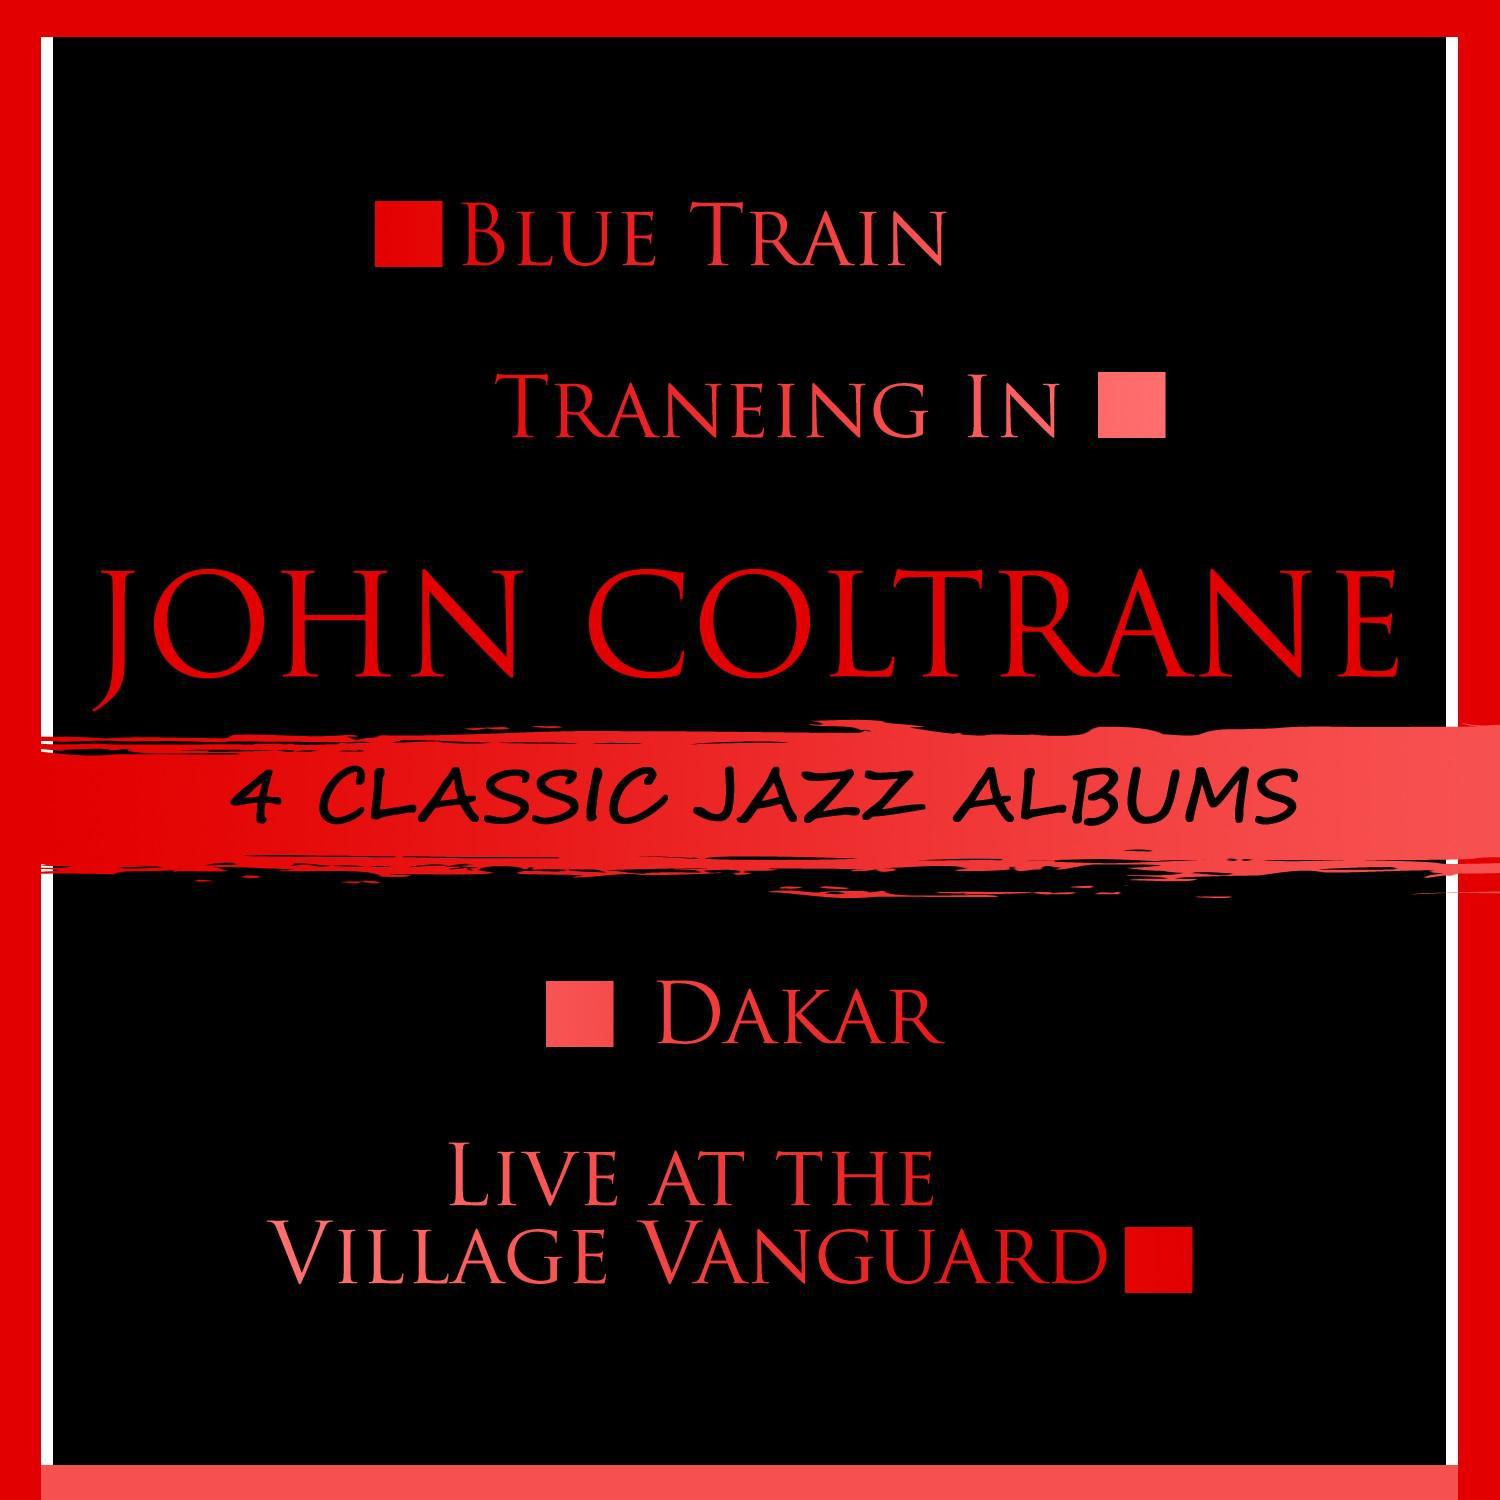 4 Classic Jazz Albums: Blue Train / Traneing In / Dakar / Live at the Village Vanguard